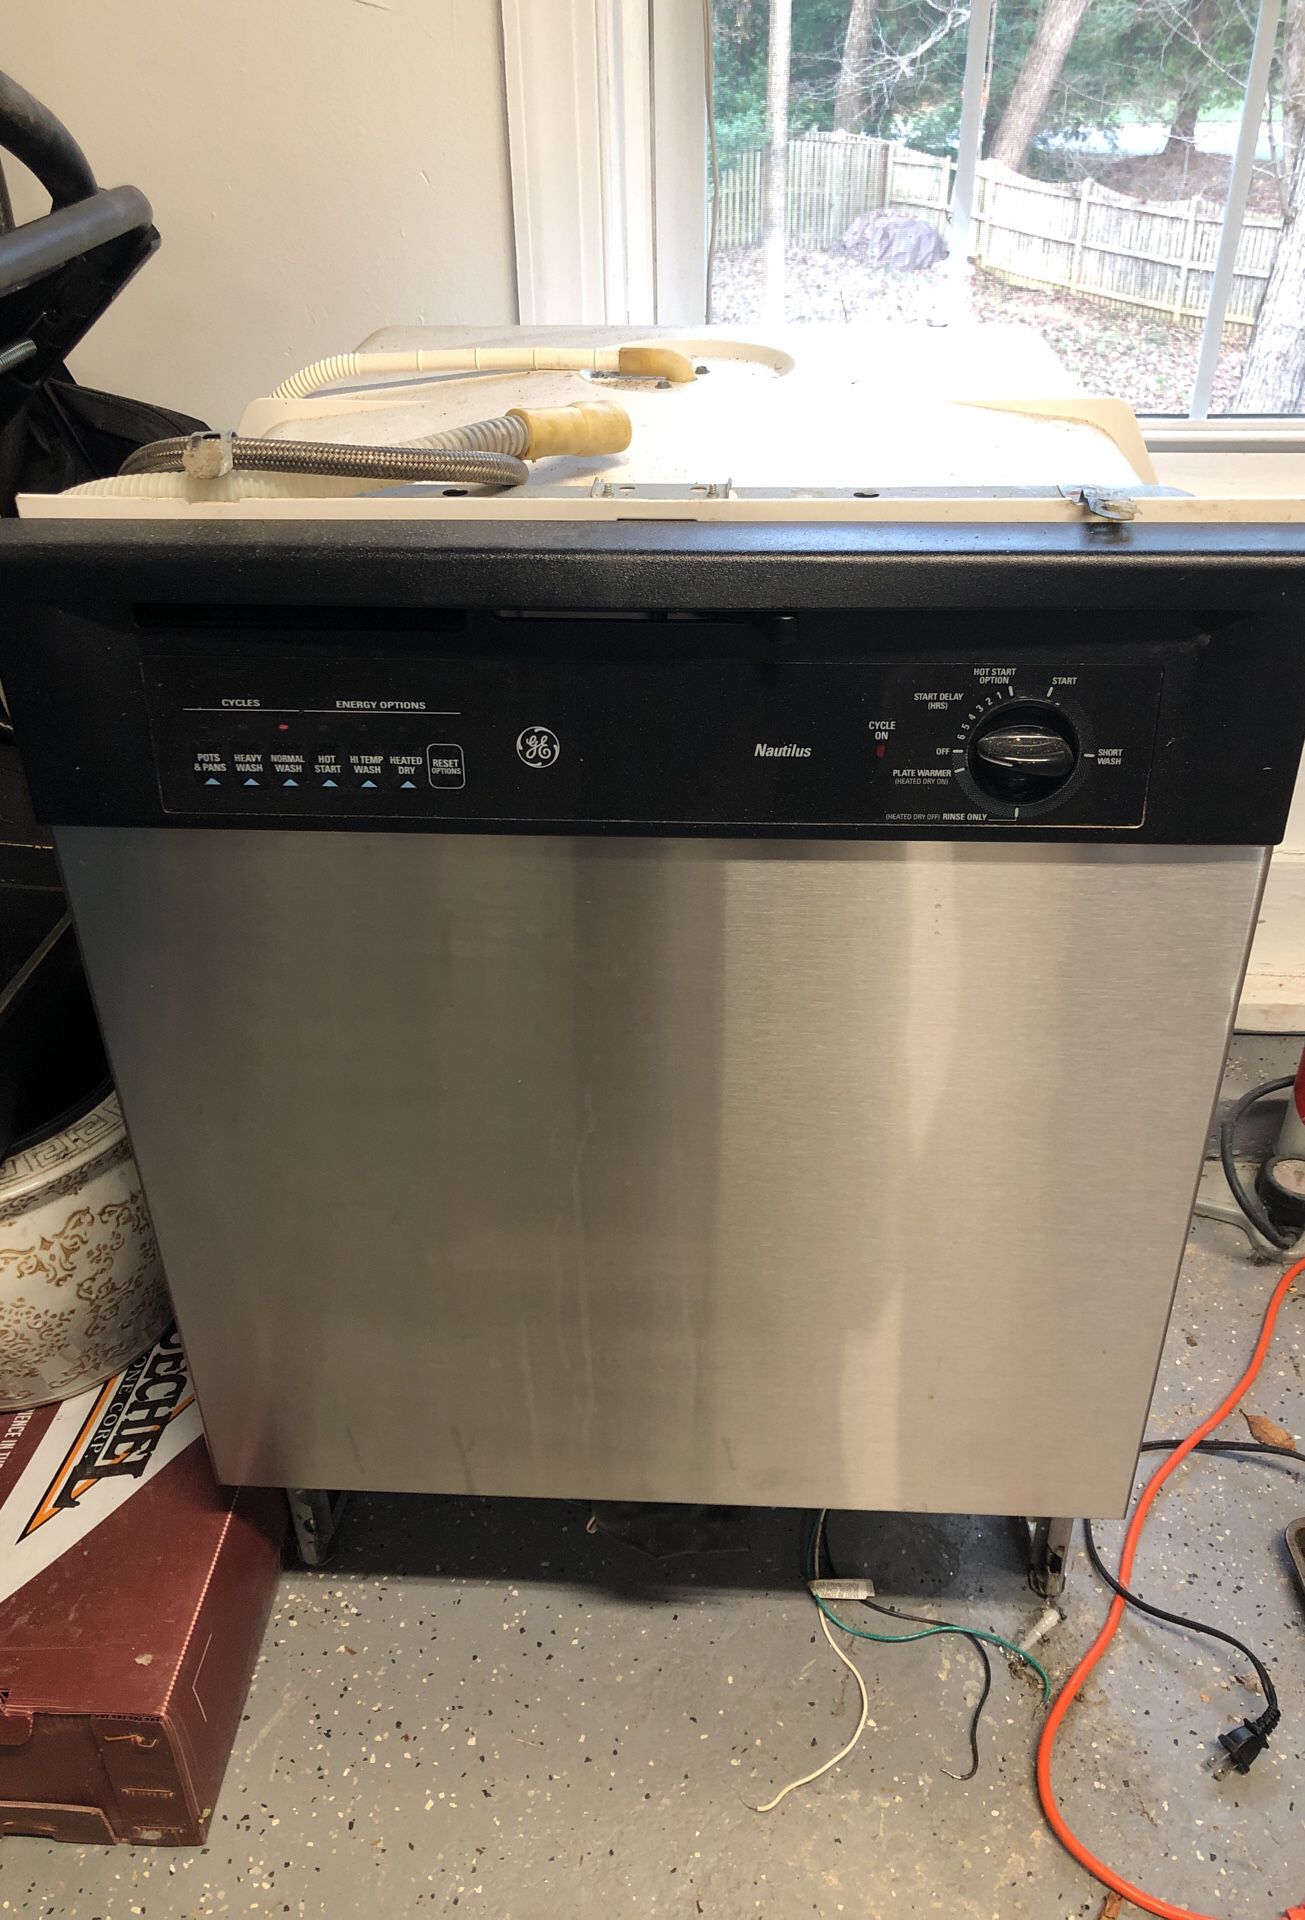 GE dishwasher - Excellent condition